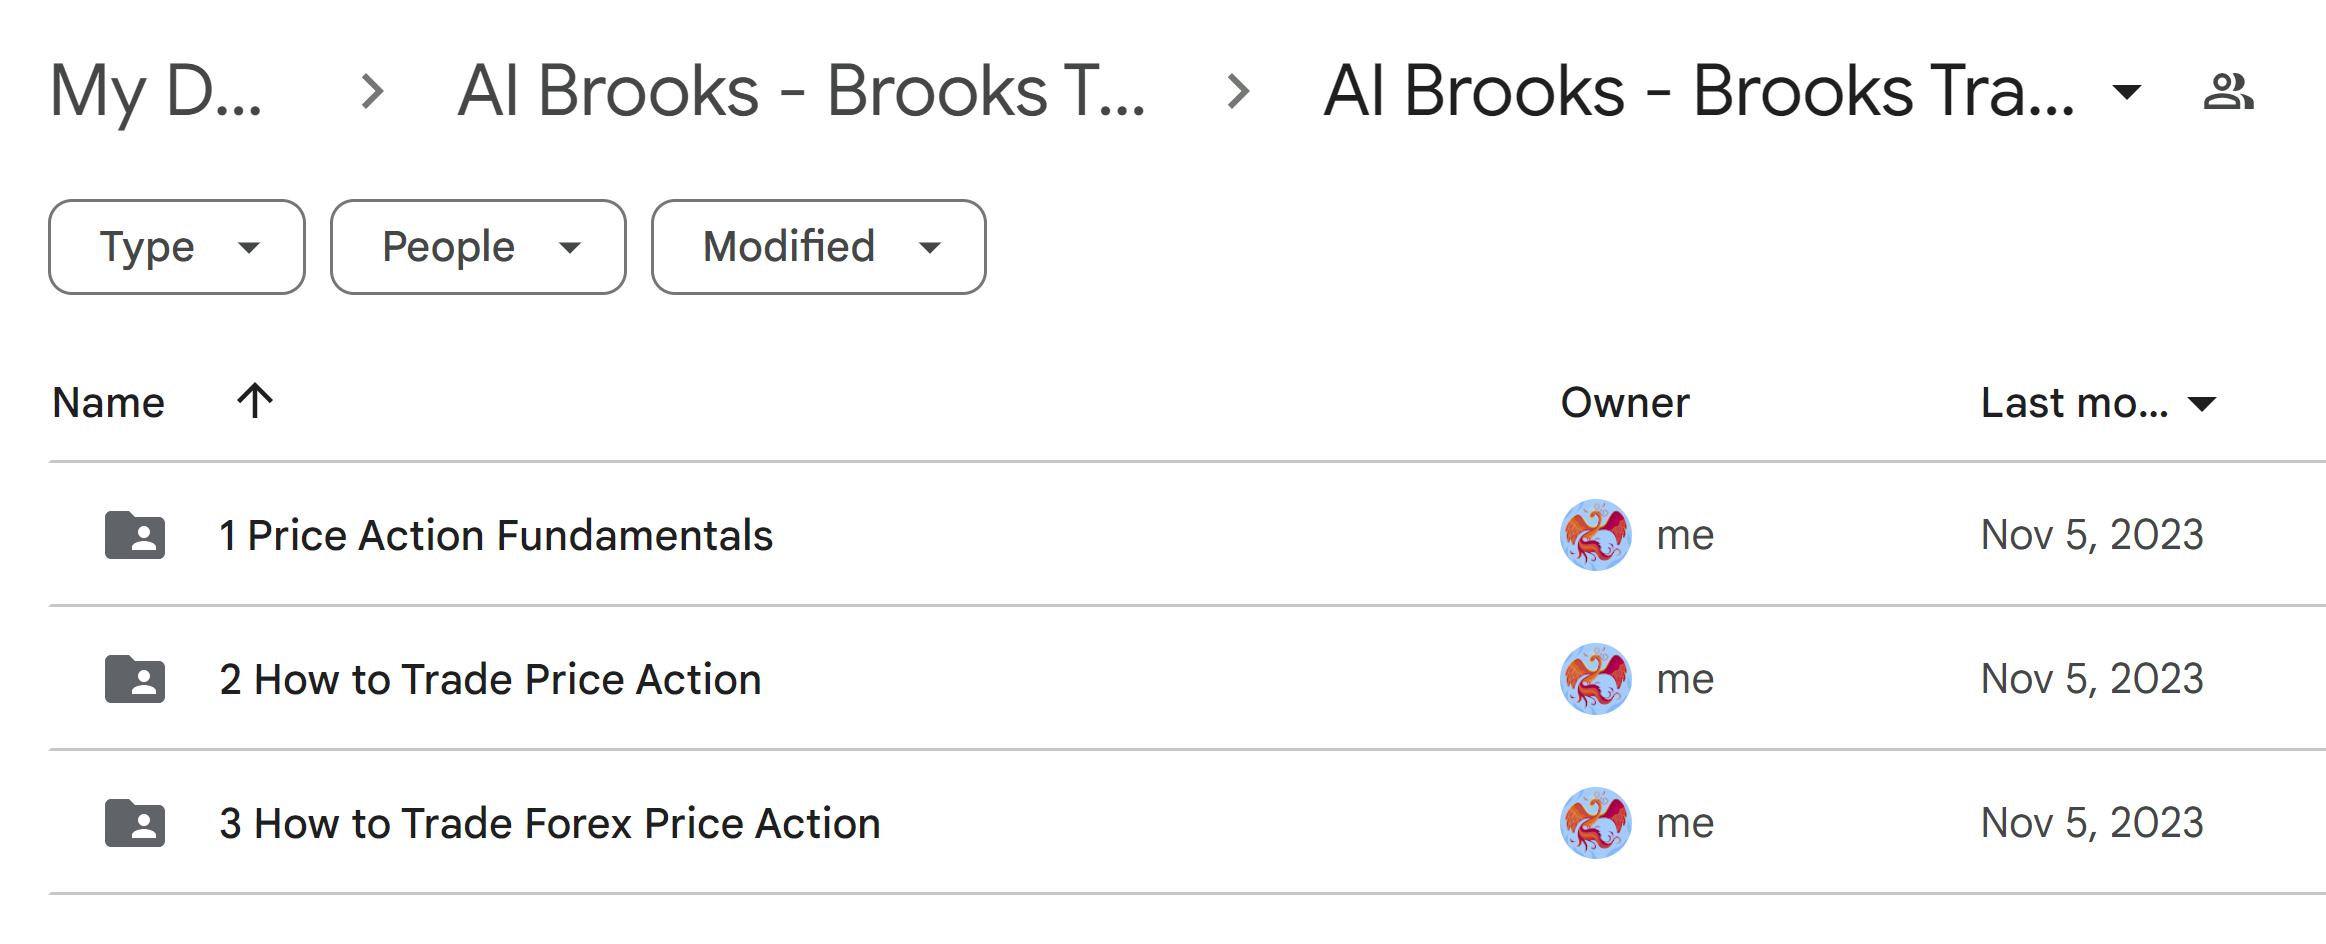 Al Brooks Brooks Trading Course